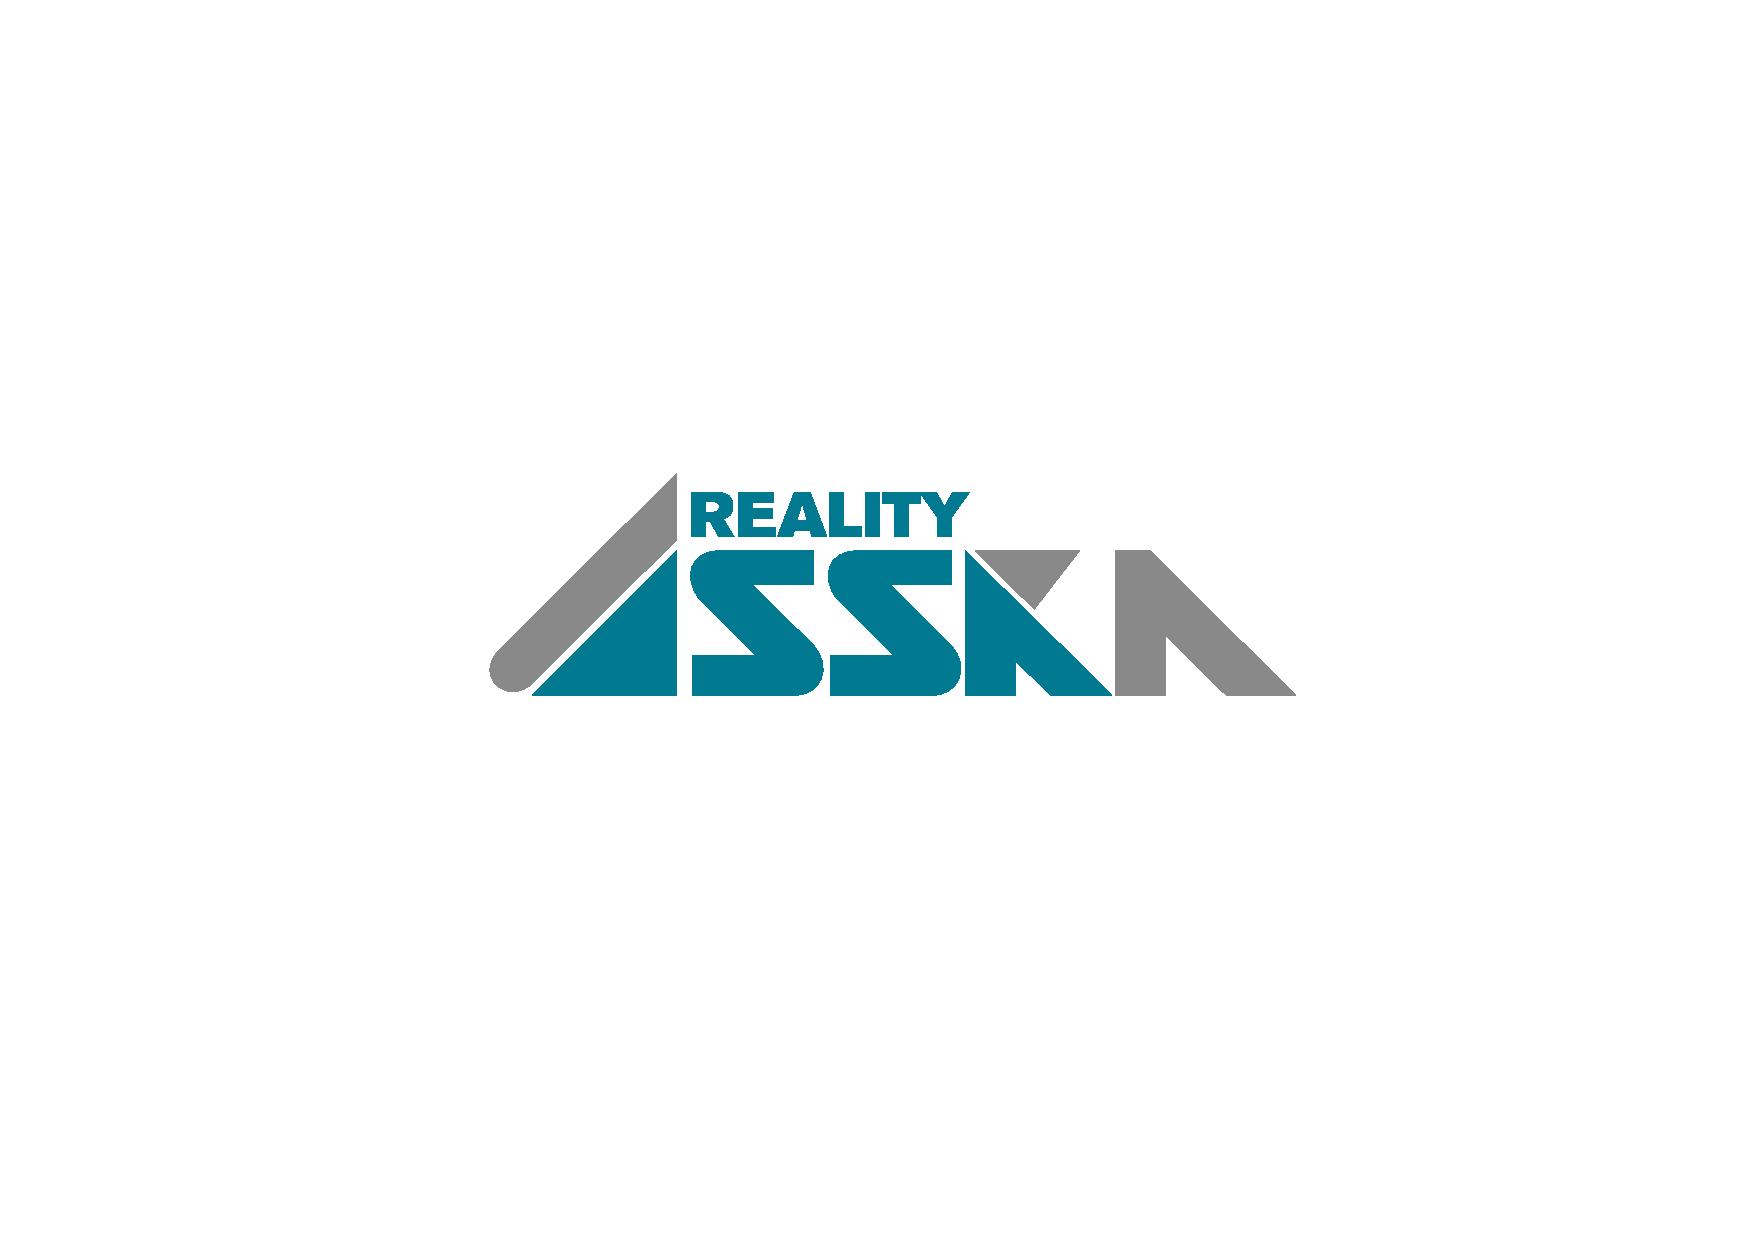 SSKA - Reality, s.r.o.